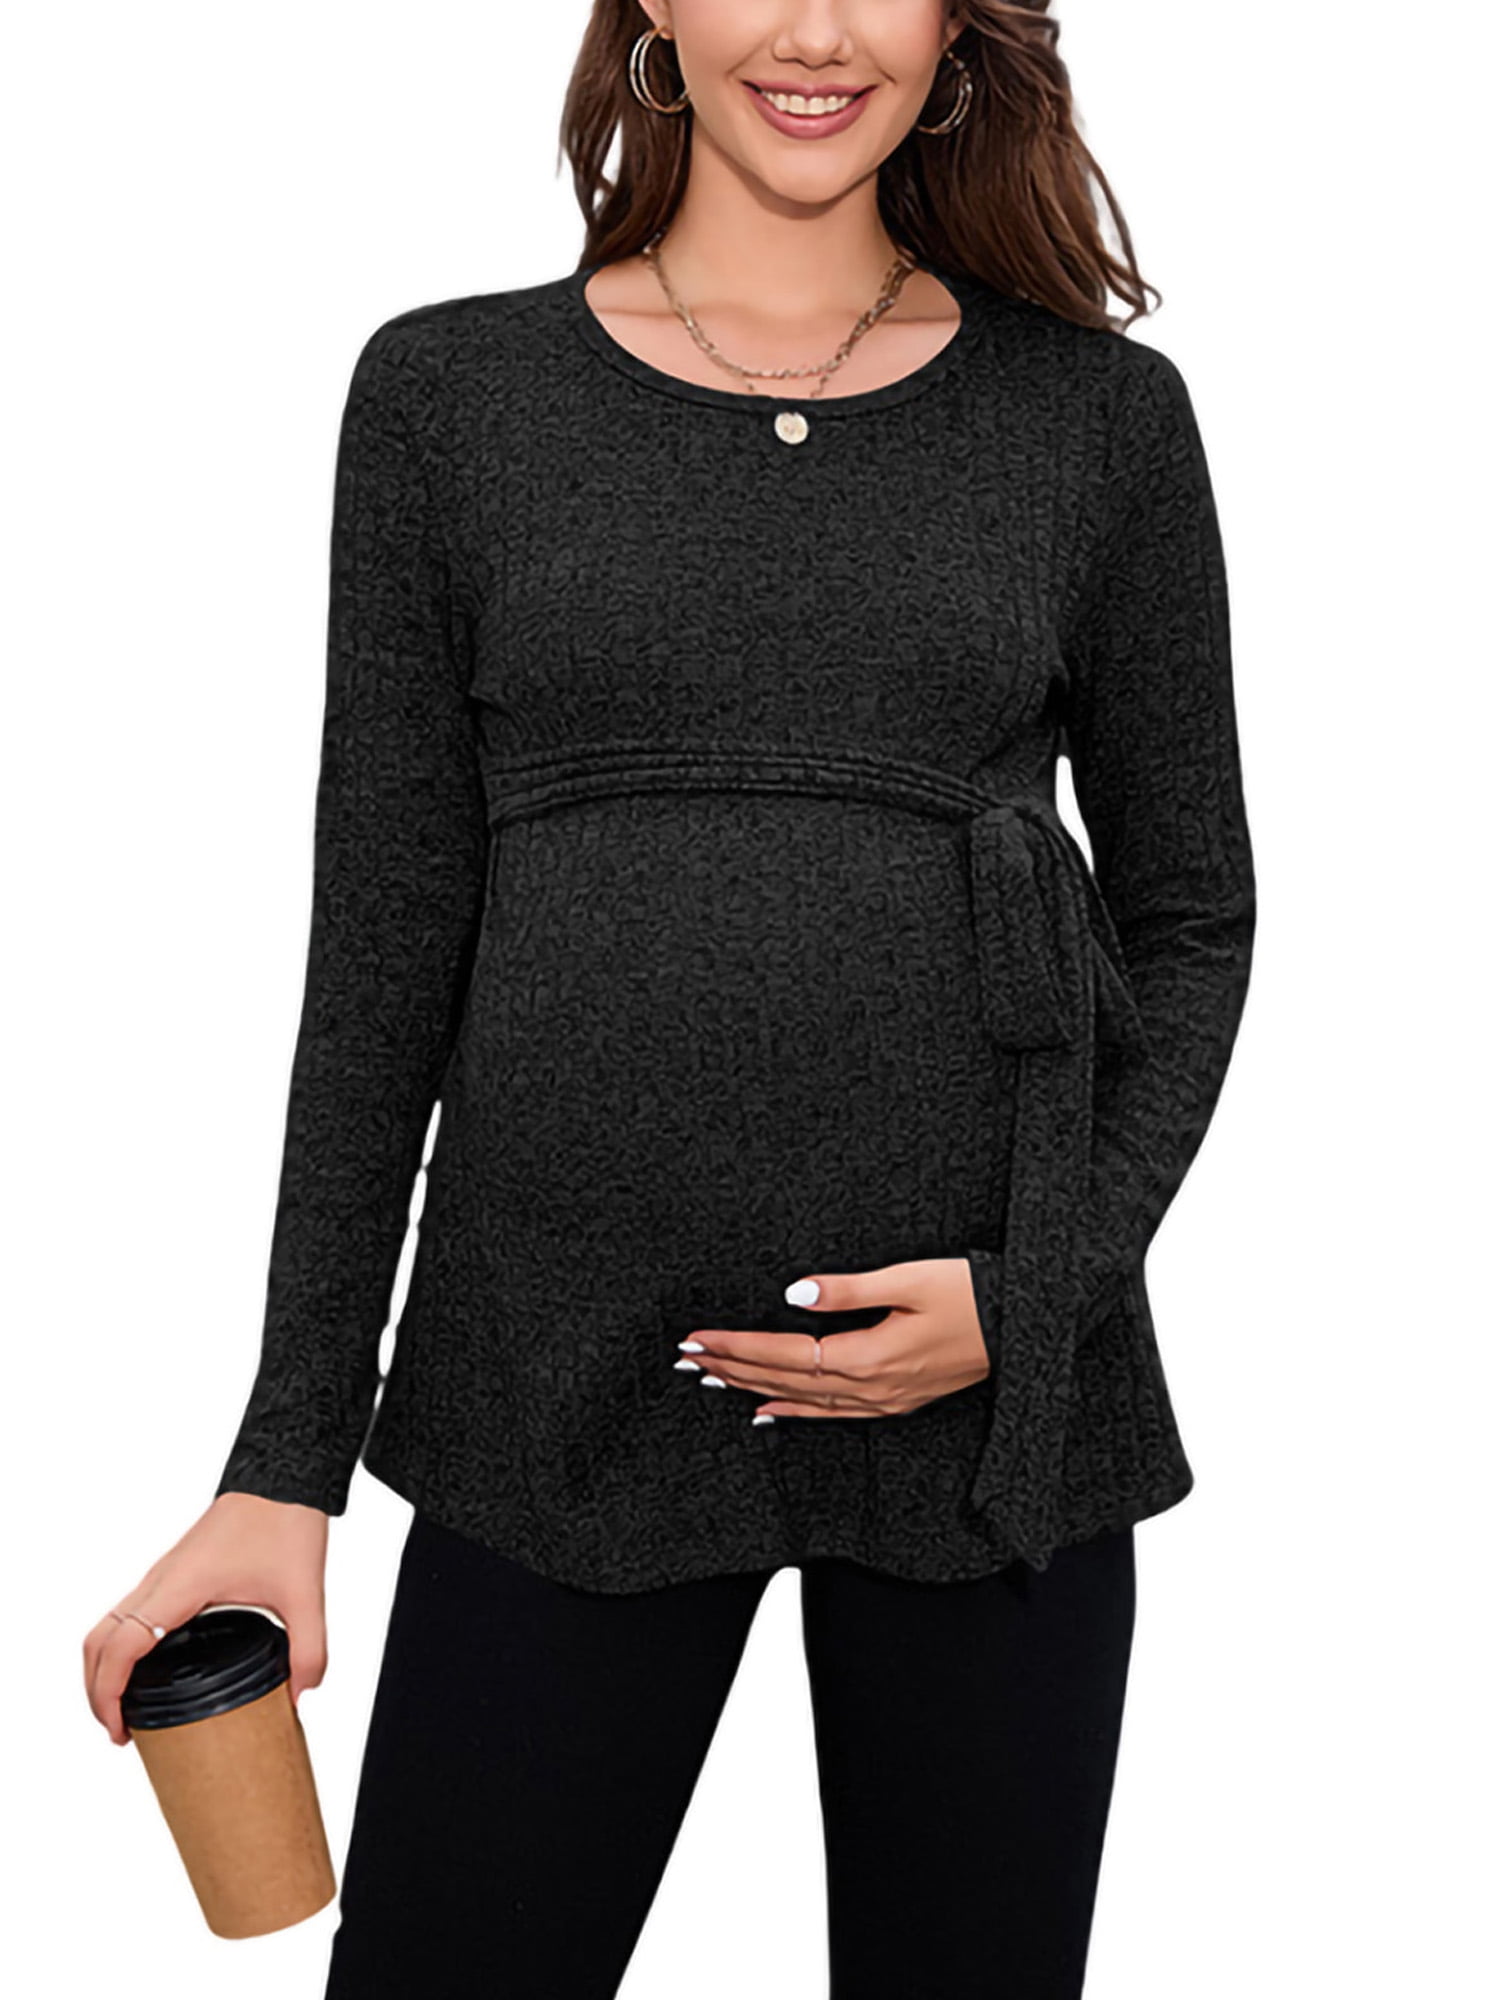 Capreze Women Maternity Shirts Ribbed Knit Pregnancy Tops Long Sleeve  Pregnant Tee Elegant T-Shirt Tie Front Clothes Black XL 